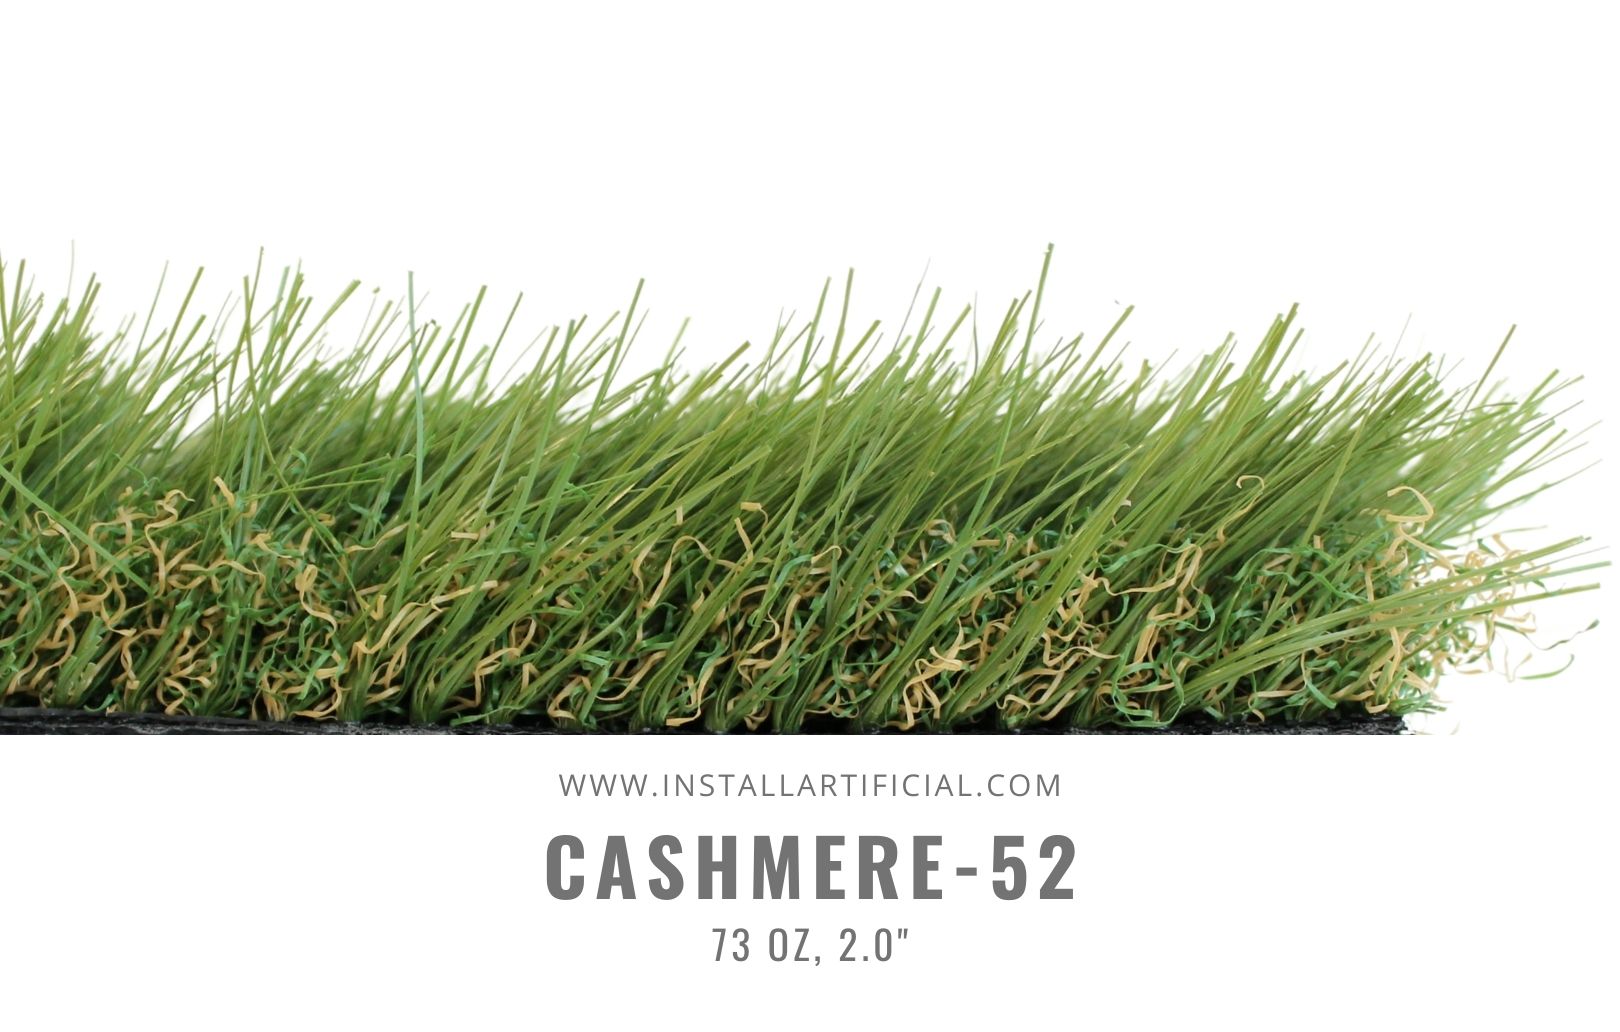 Cashmere-52, Global Syn Turf, side